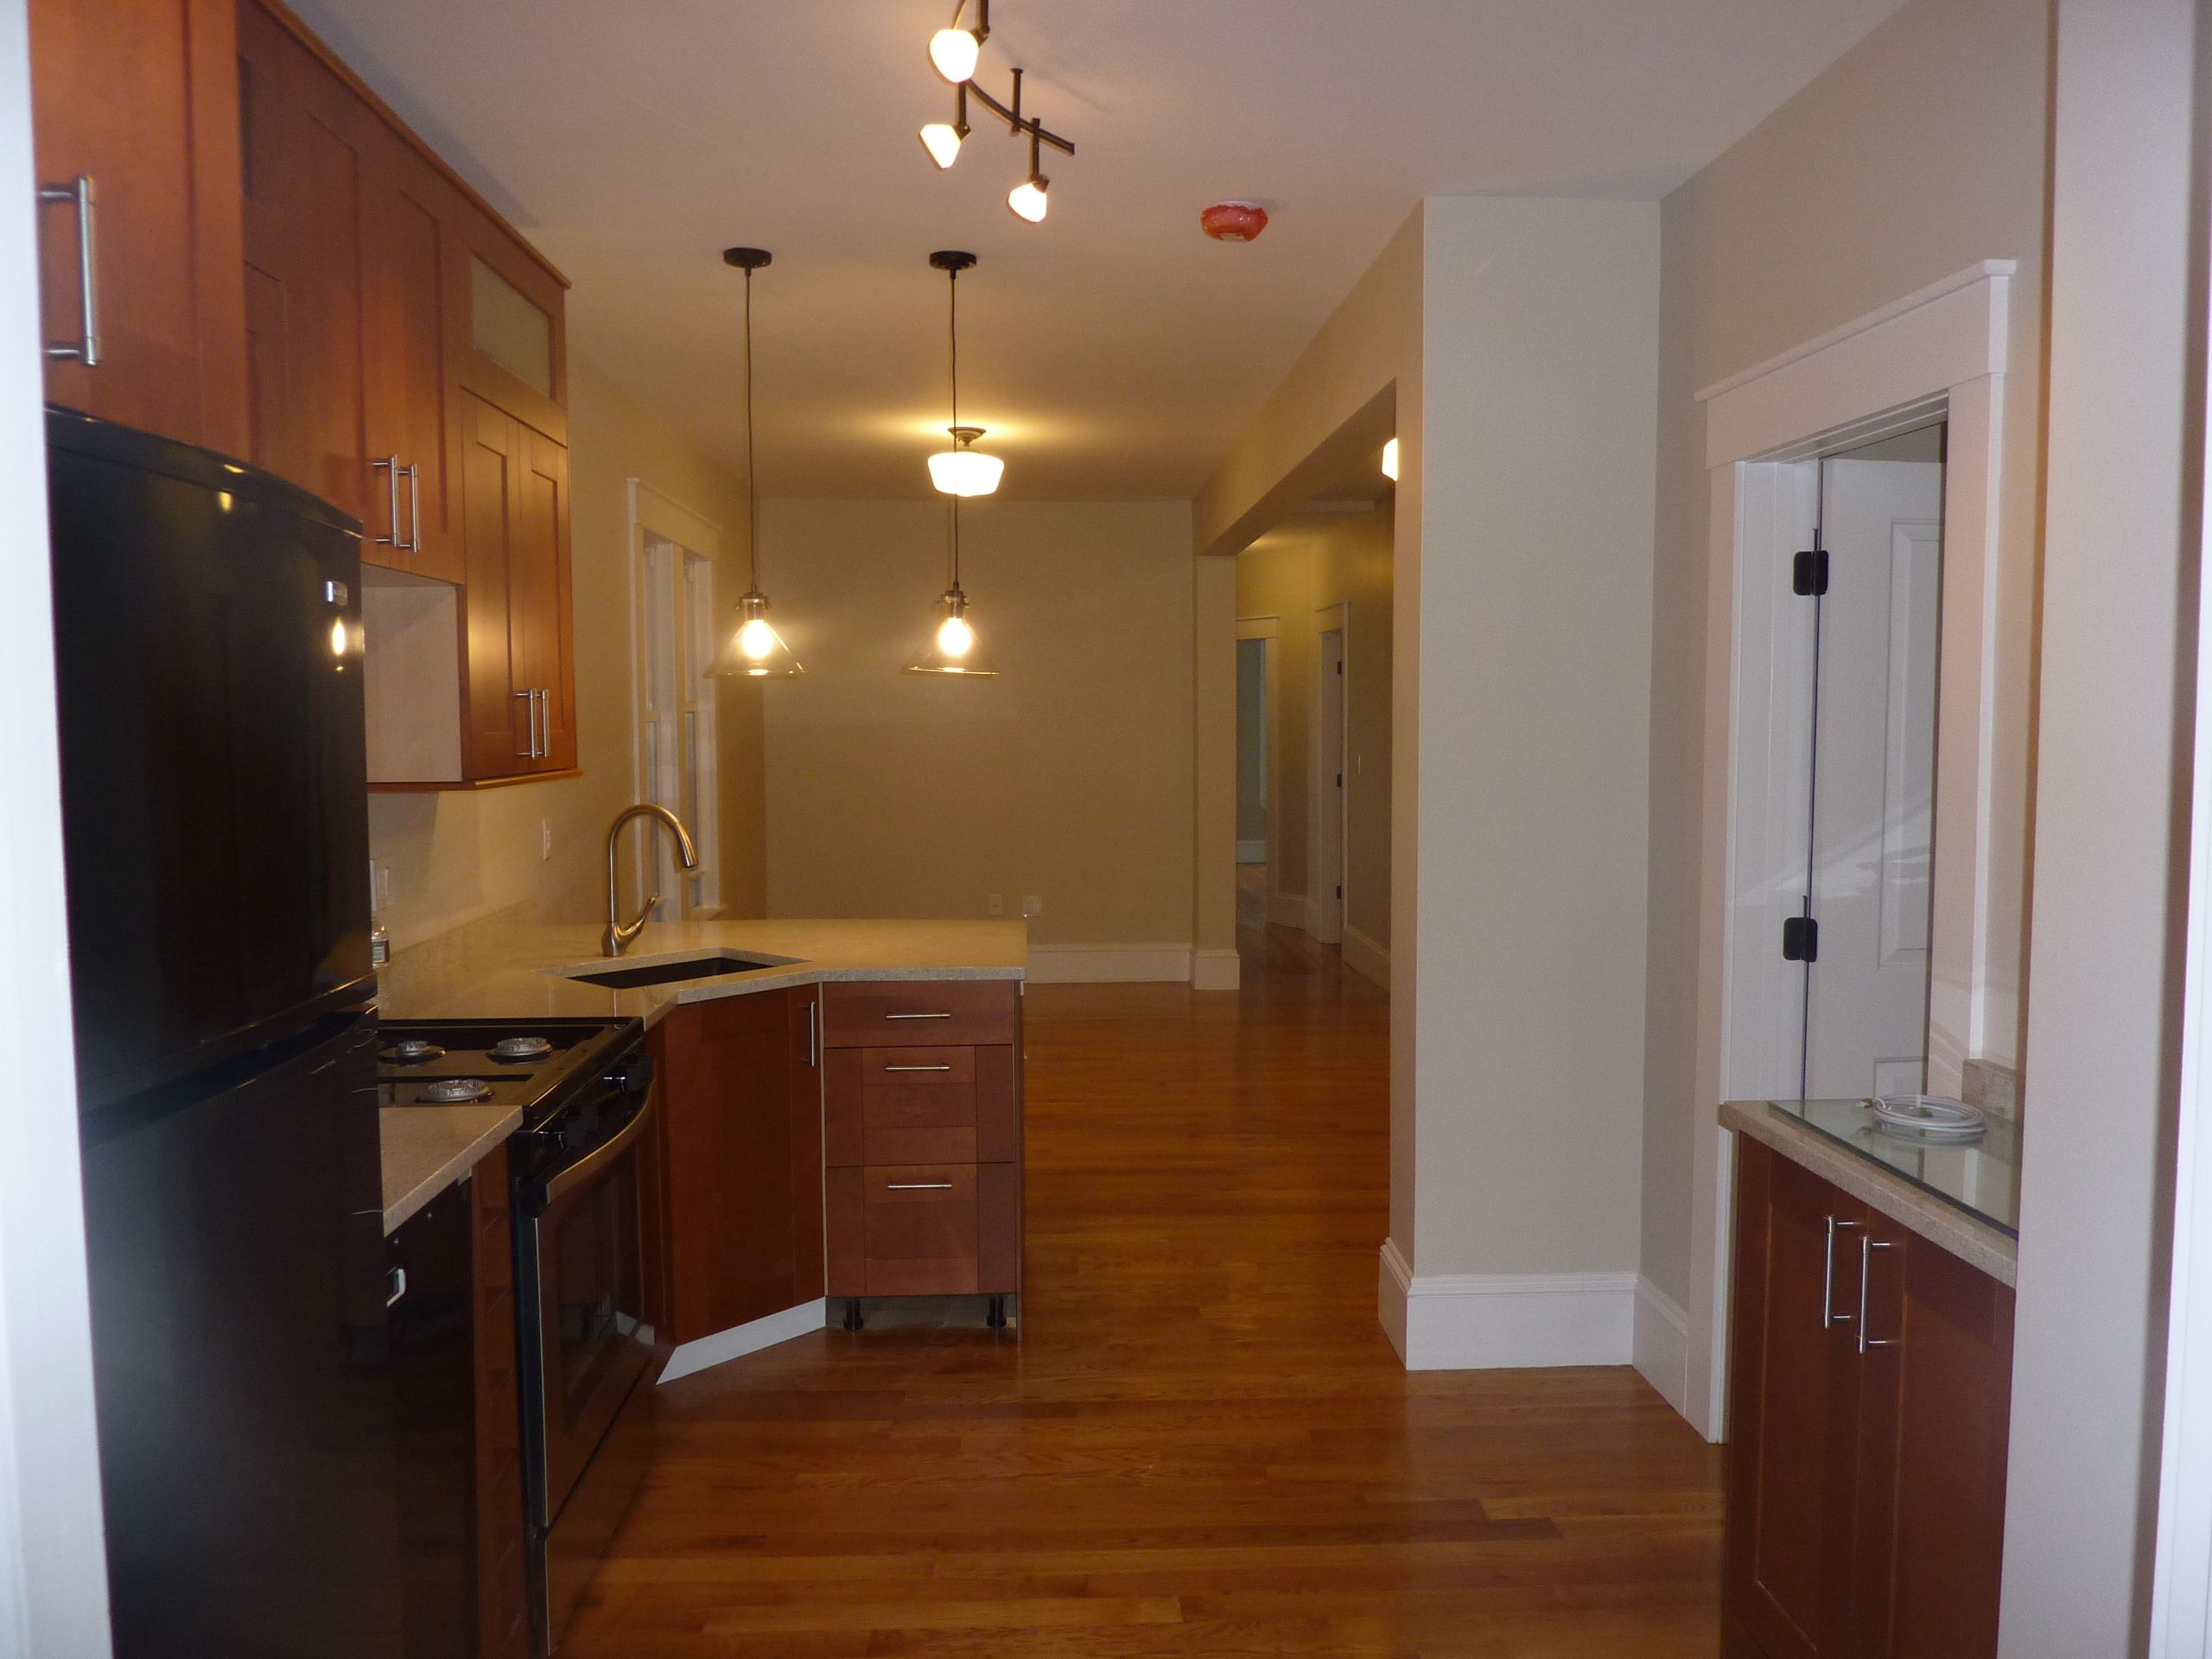 Photos of apartment on Orient Ave.,Boston MA 02128